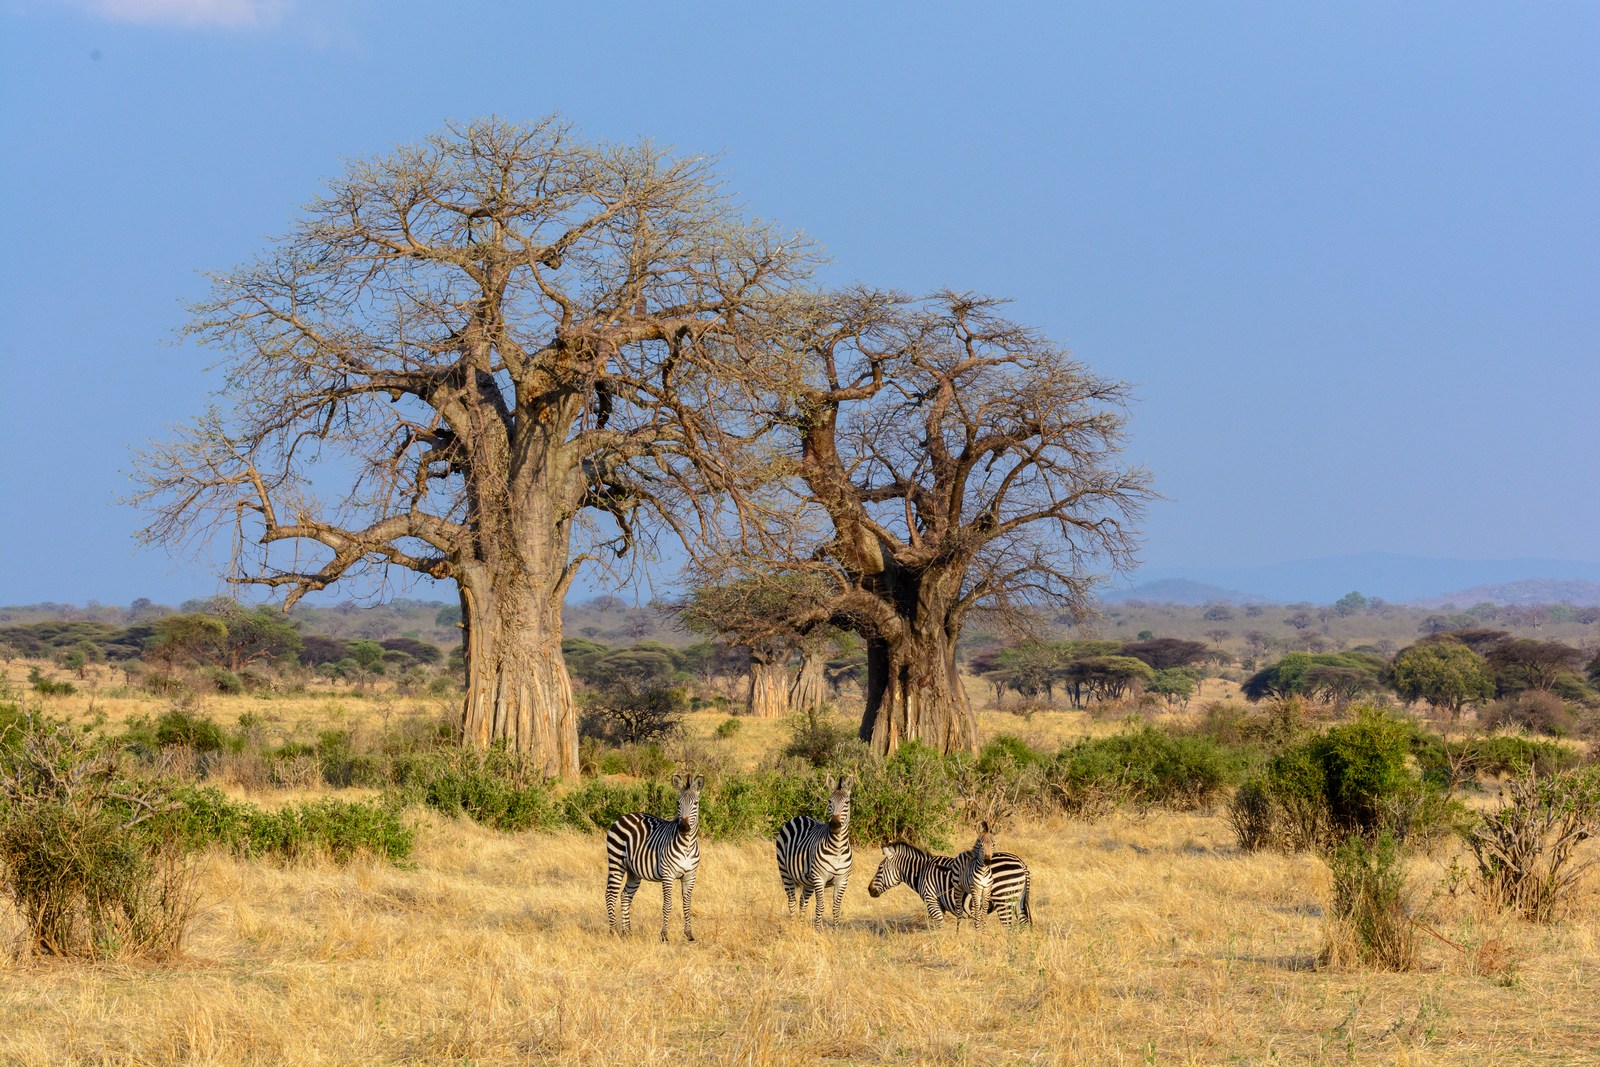 baobab trees and wildlife near Jabali Ridge, Tanzania